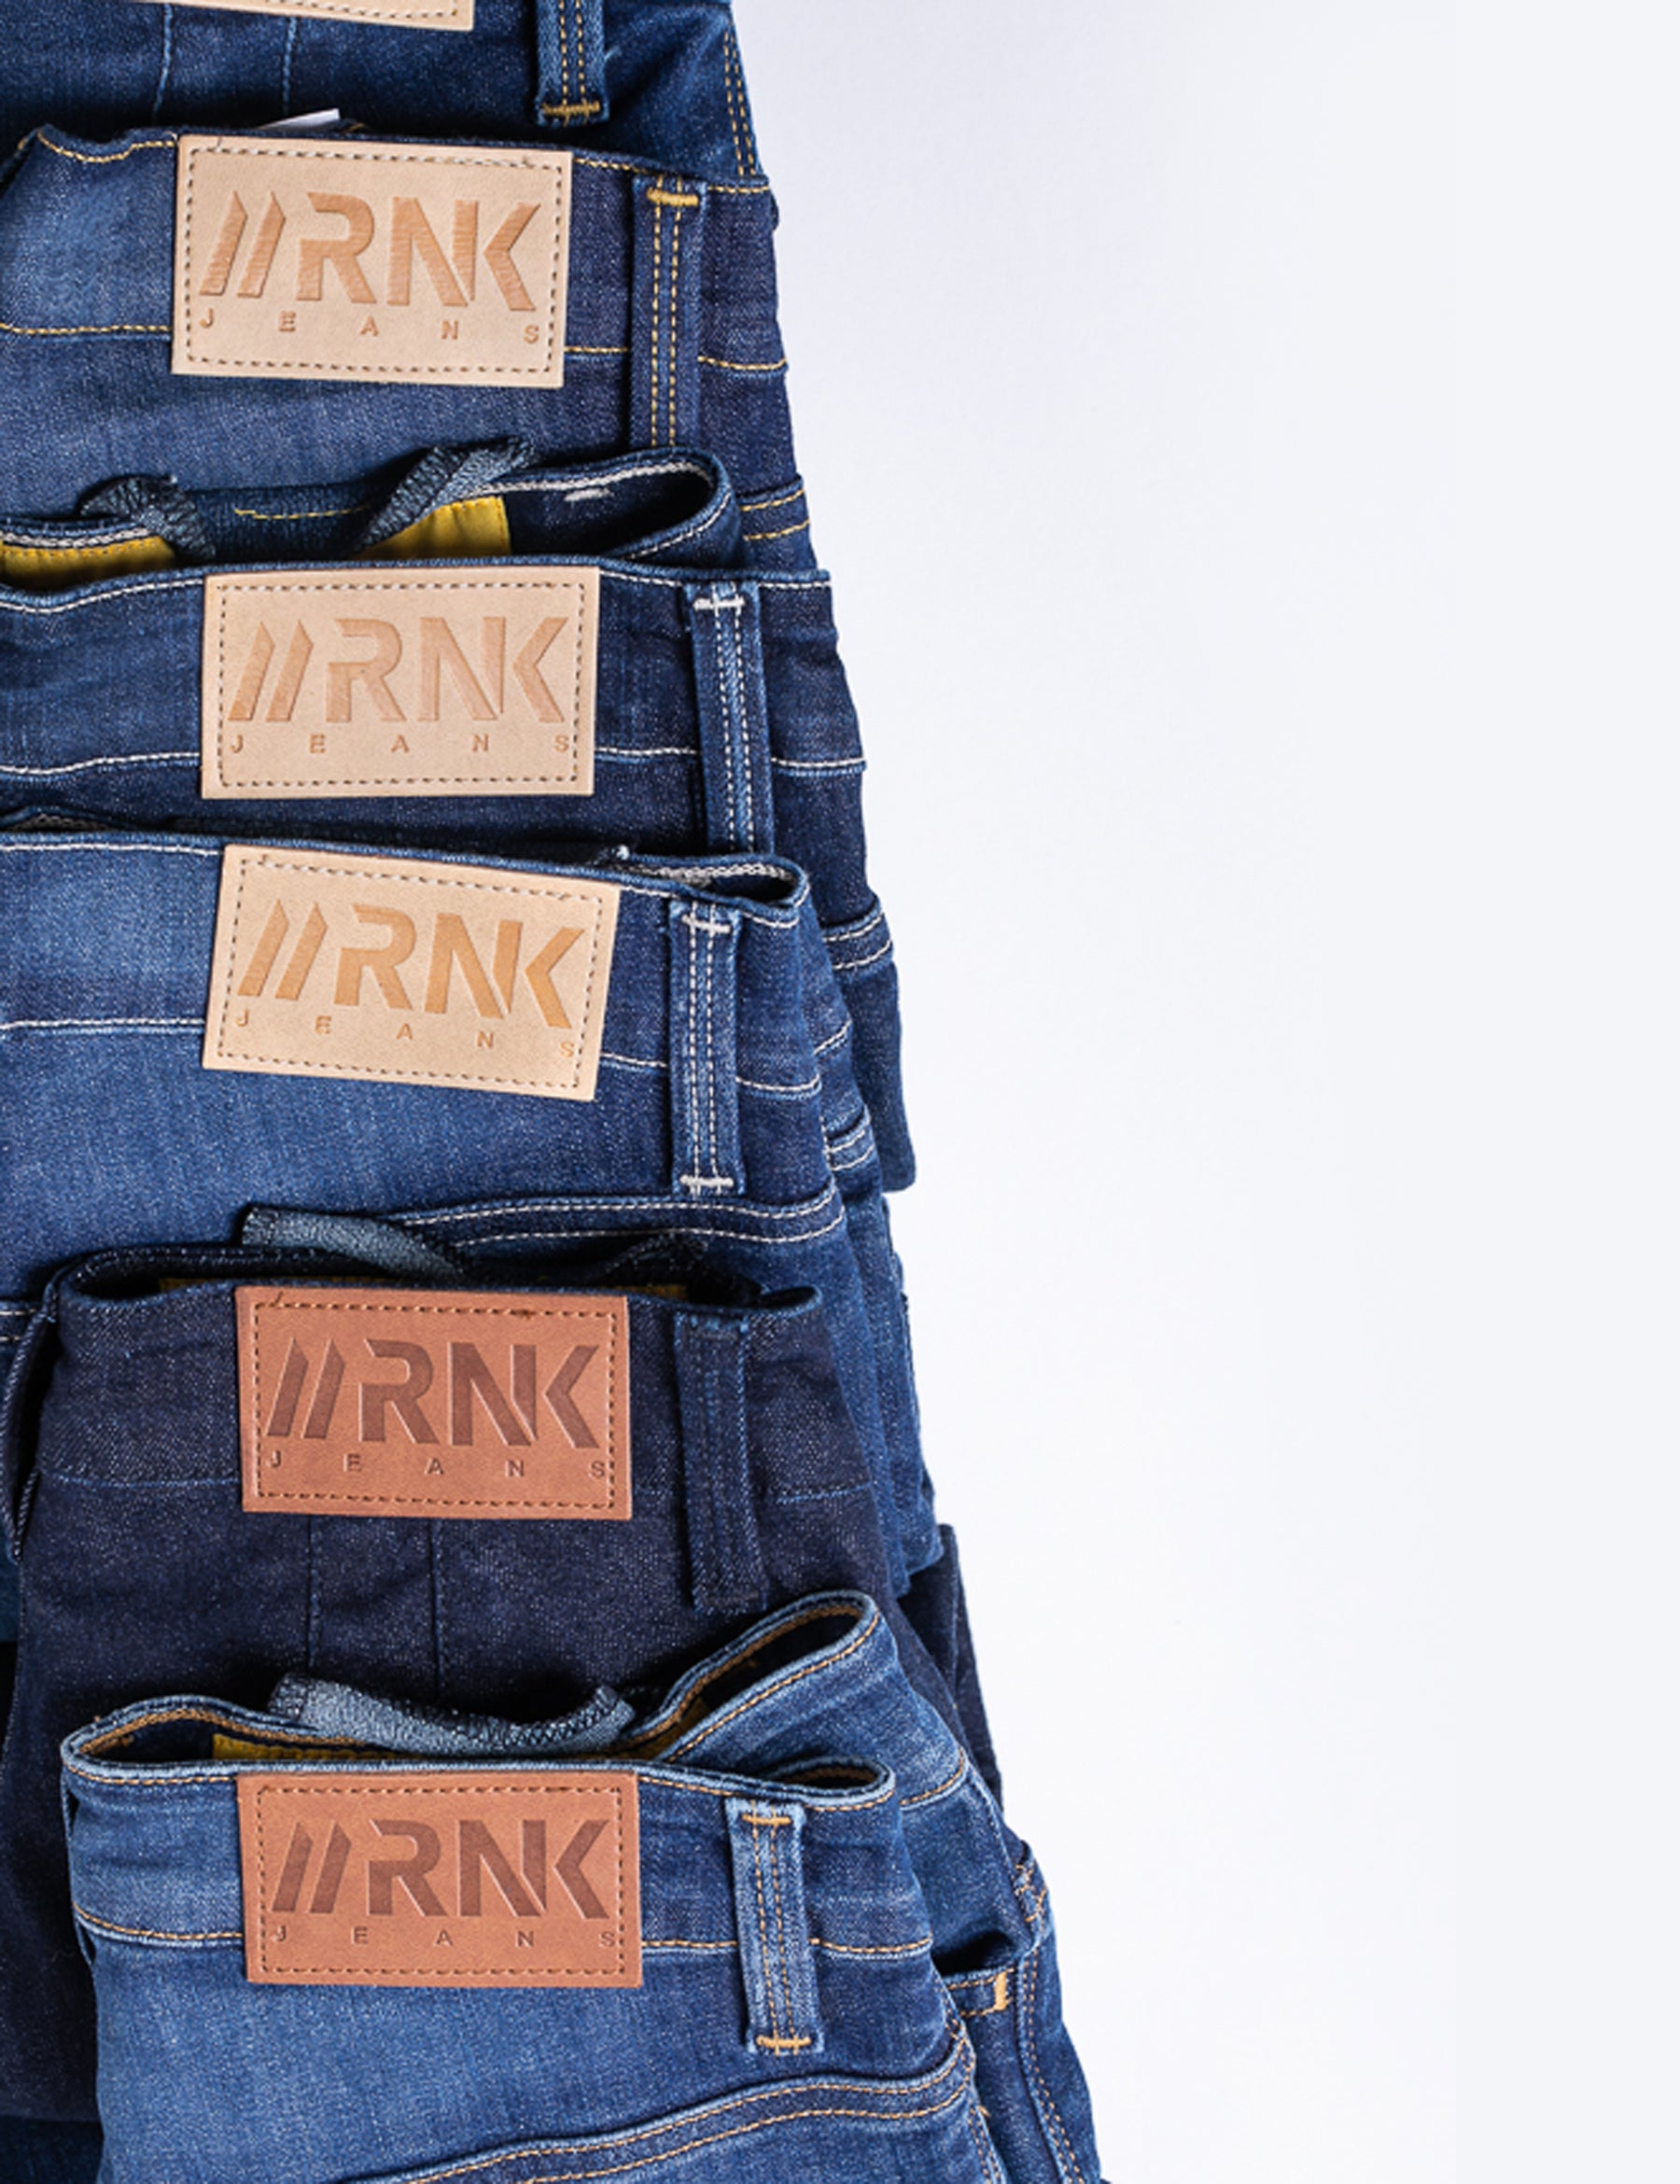 eco jeans marca aarnik